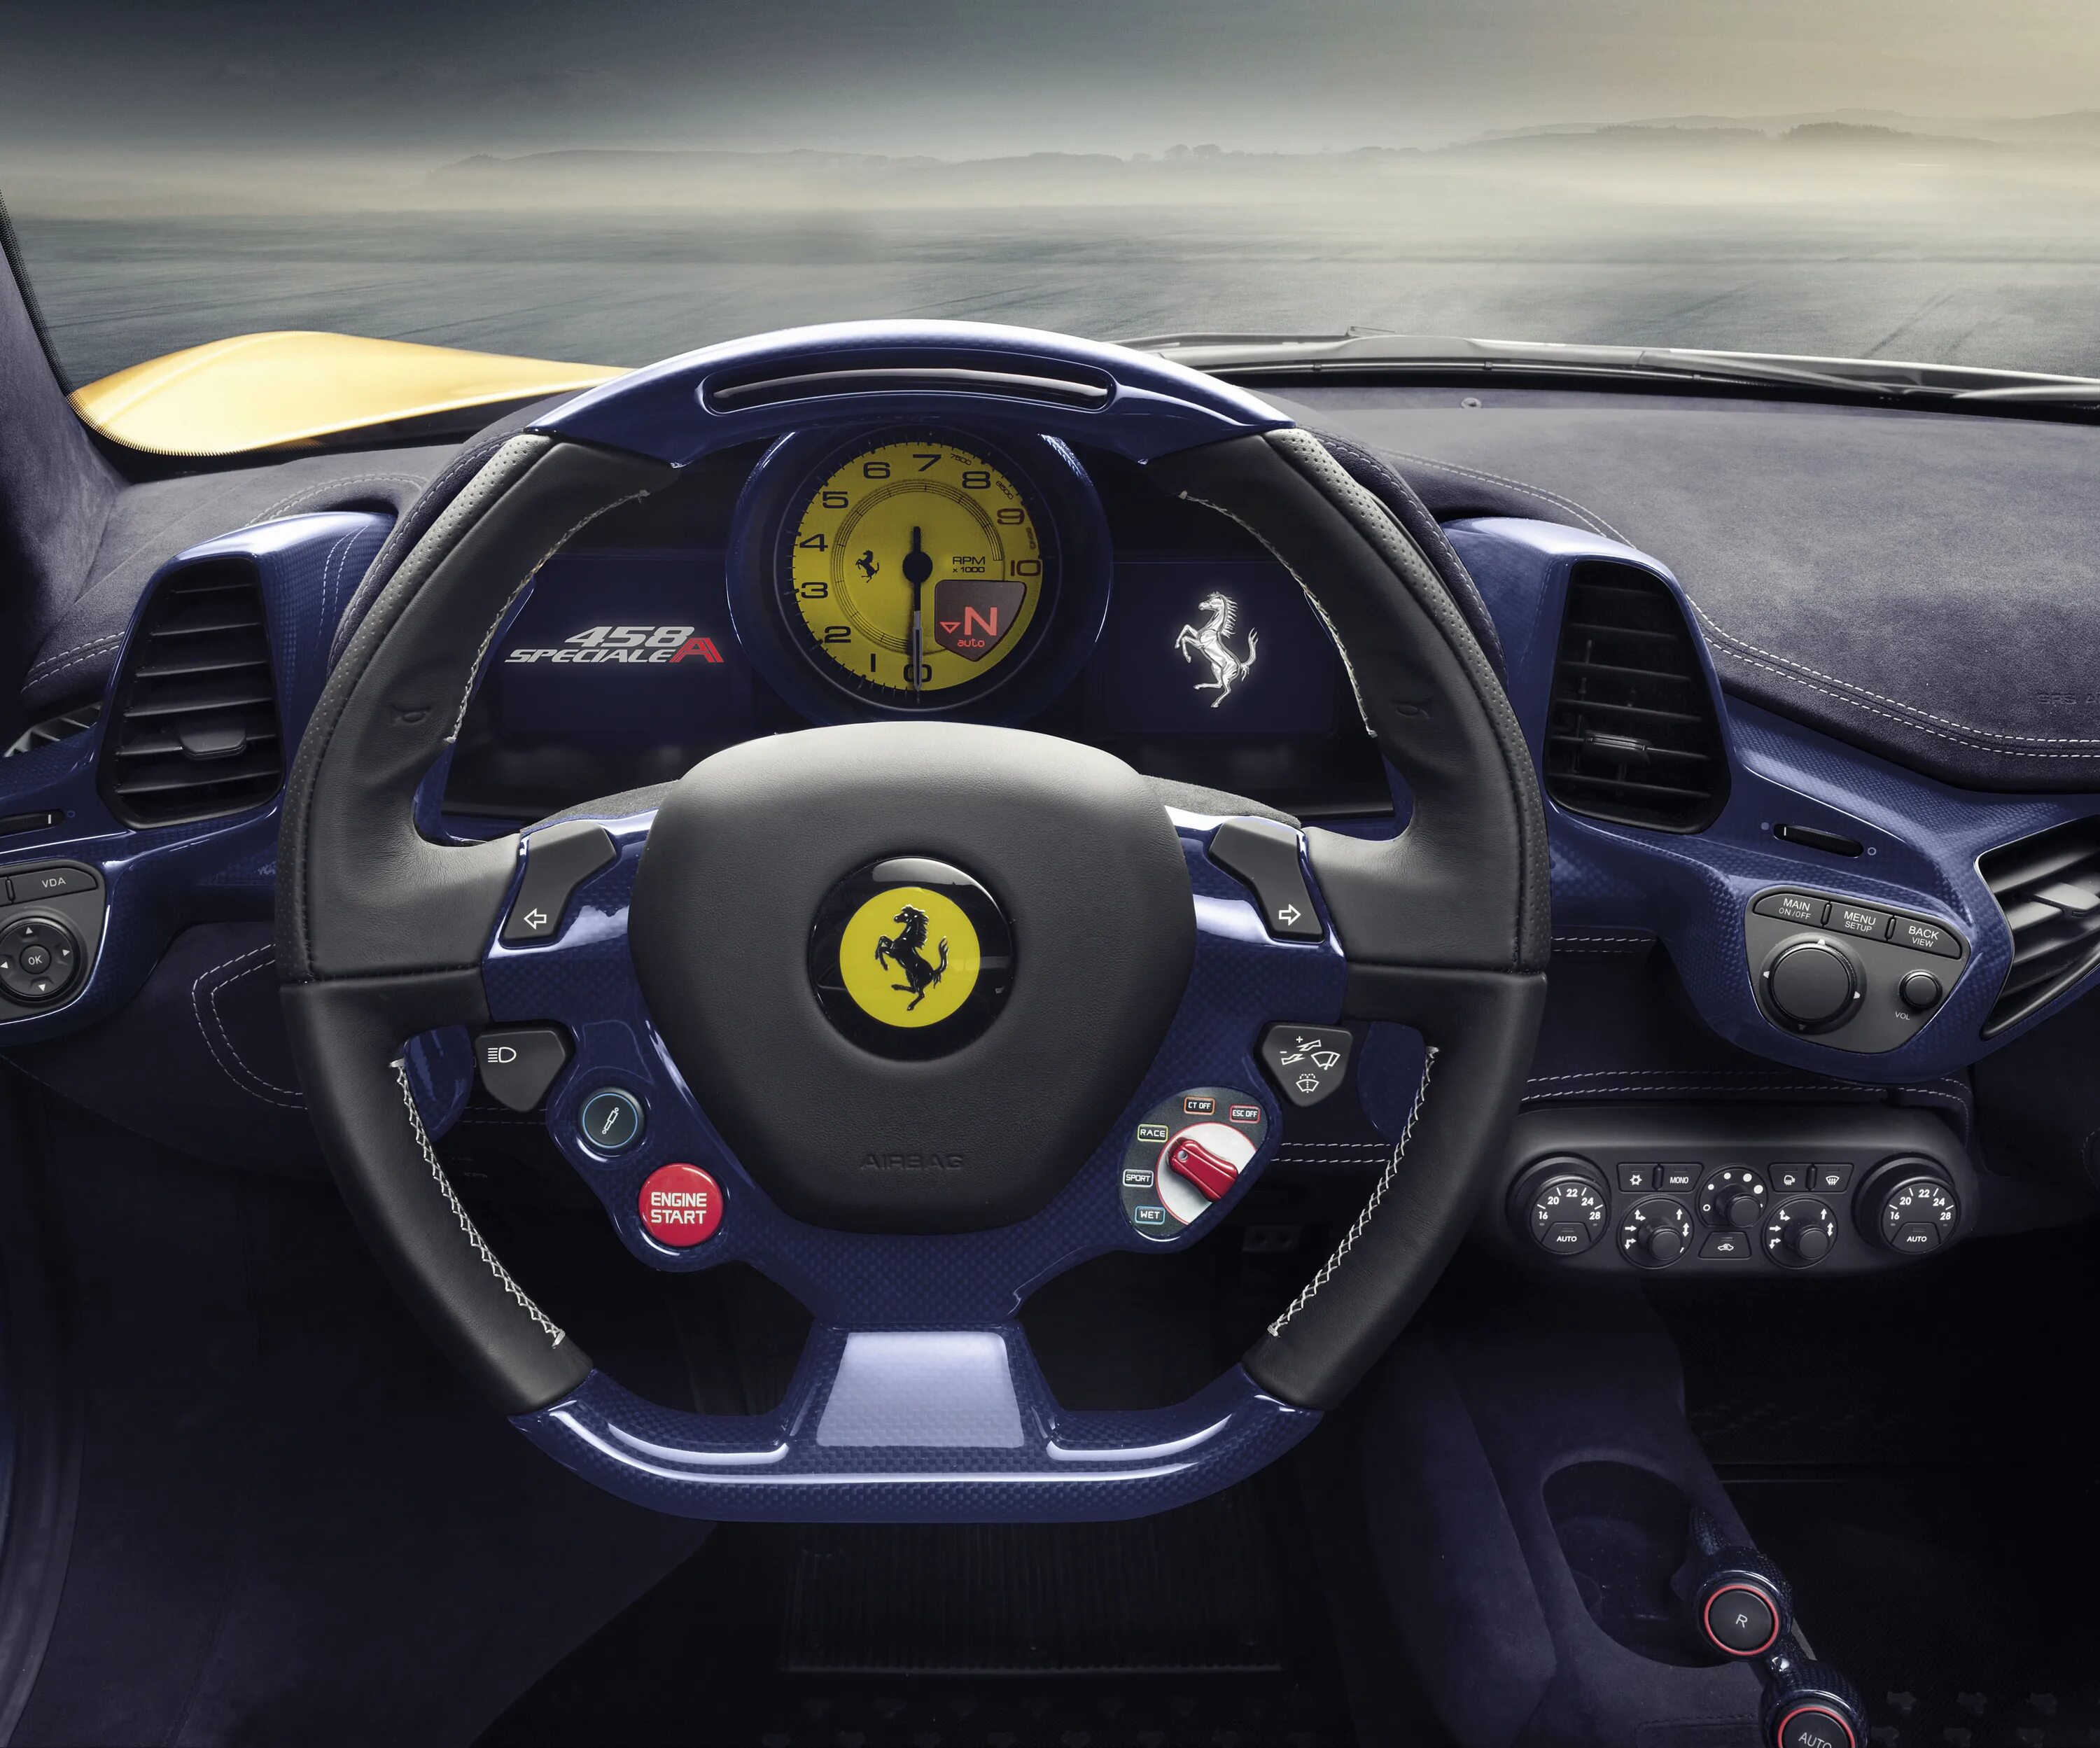 Руль ferrari 458. Ferrari 458 Italia салон. Руль Ferrari 458 Italia. Ferrari 458 speciale салон. Ferrari 458 Steering Wheel.